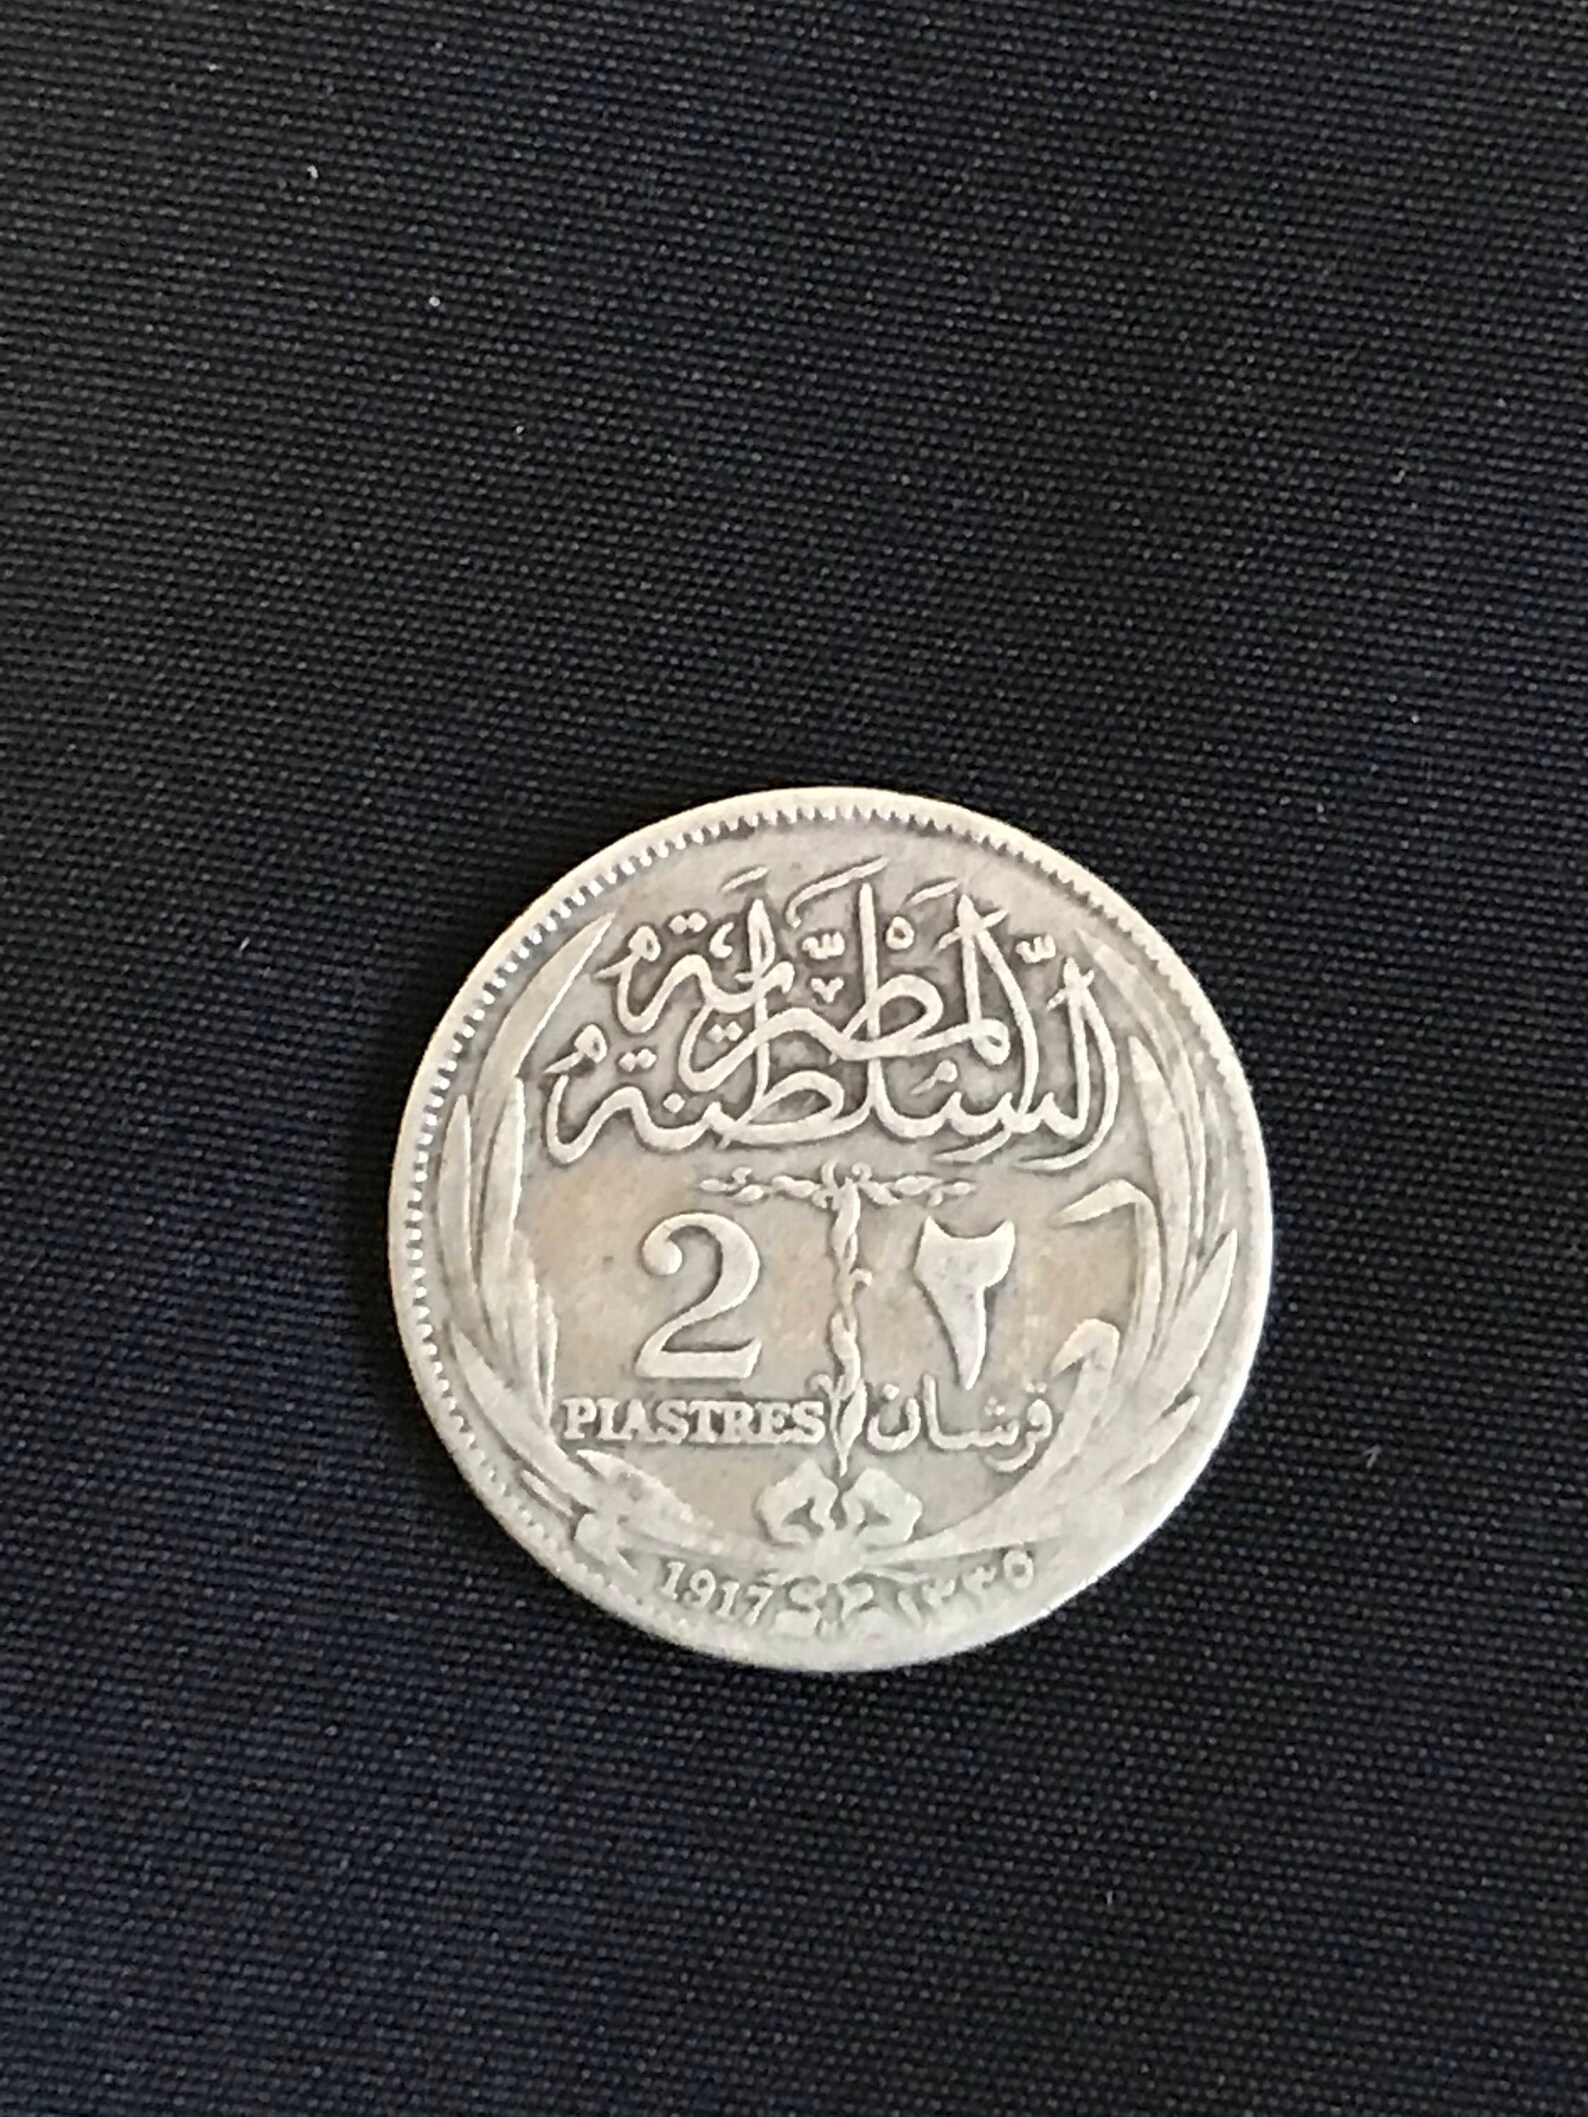 Egyptian 2 Piastre Coin - Etsy